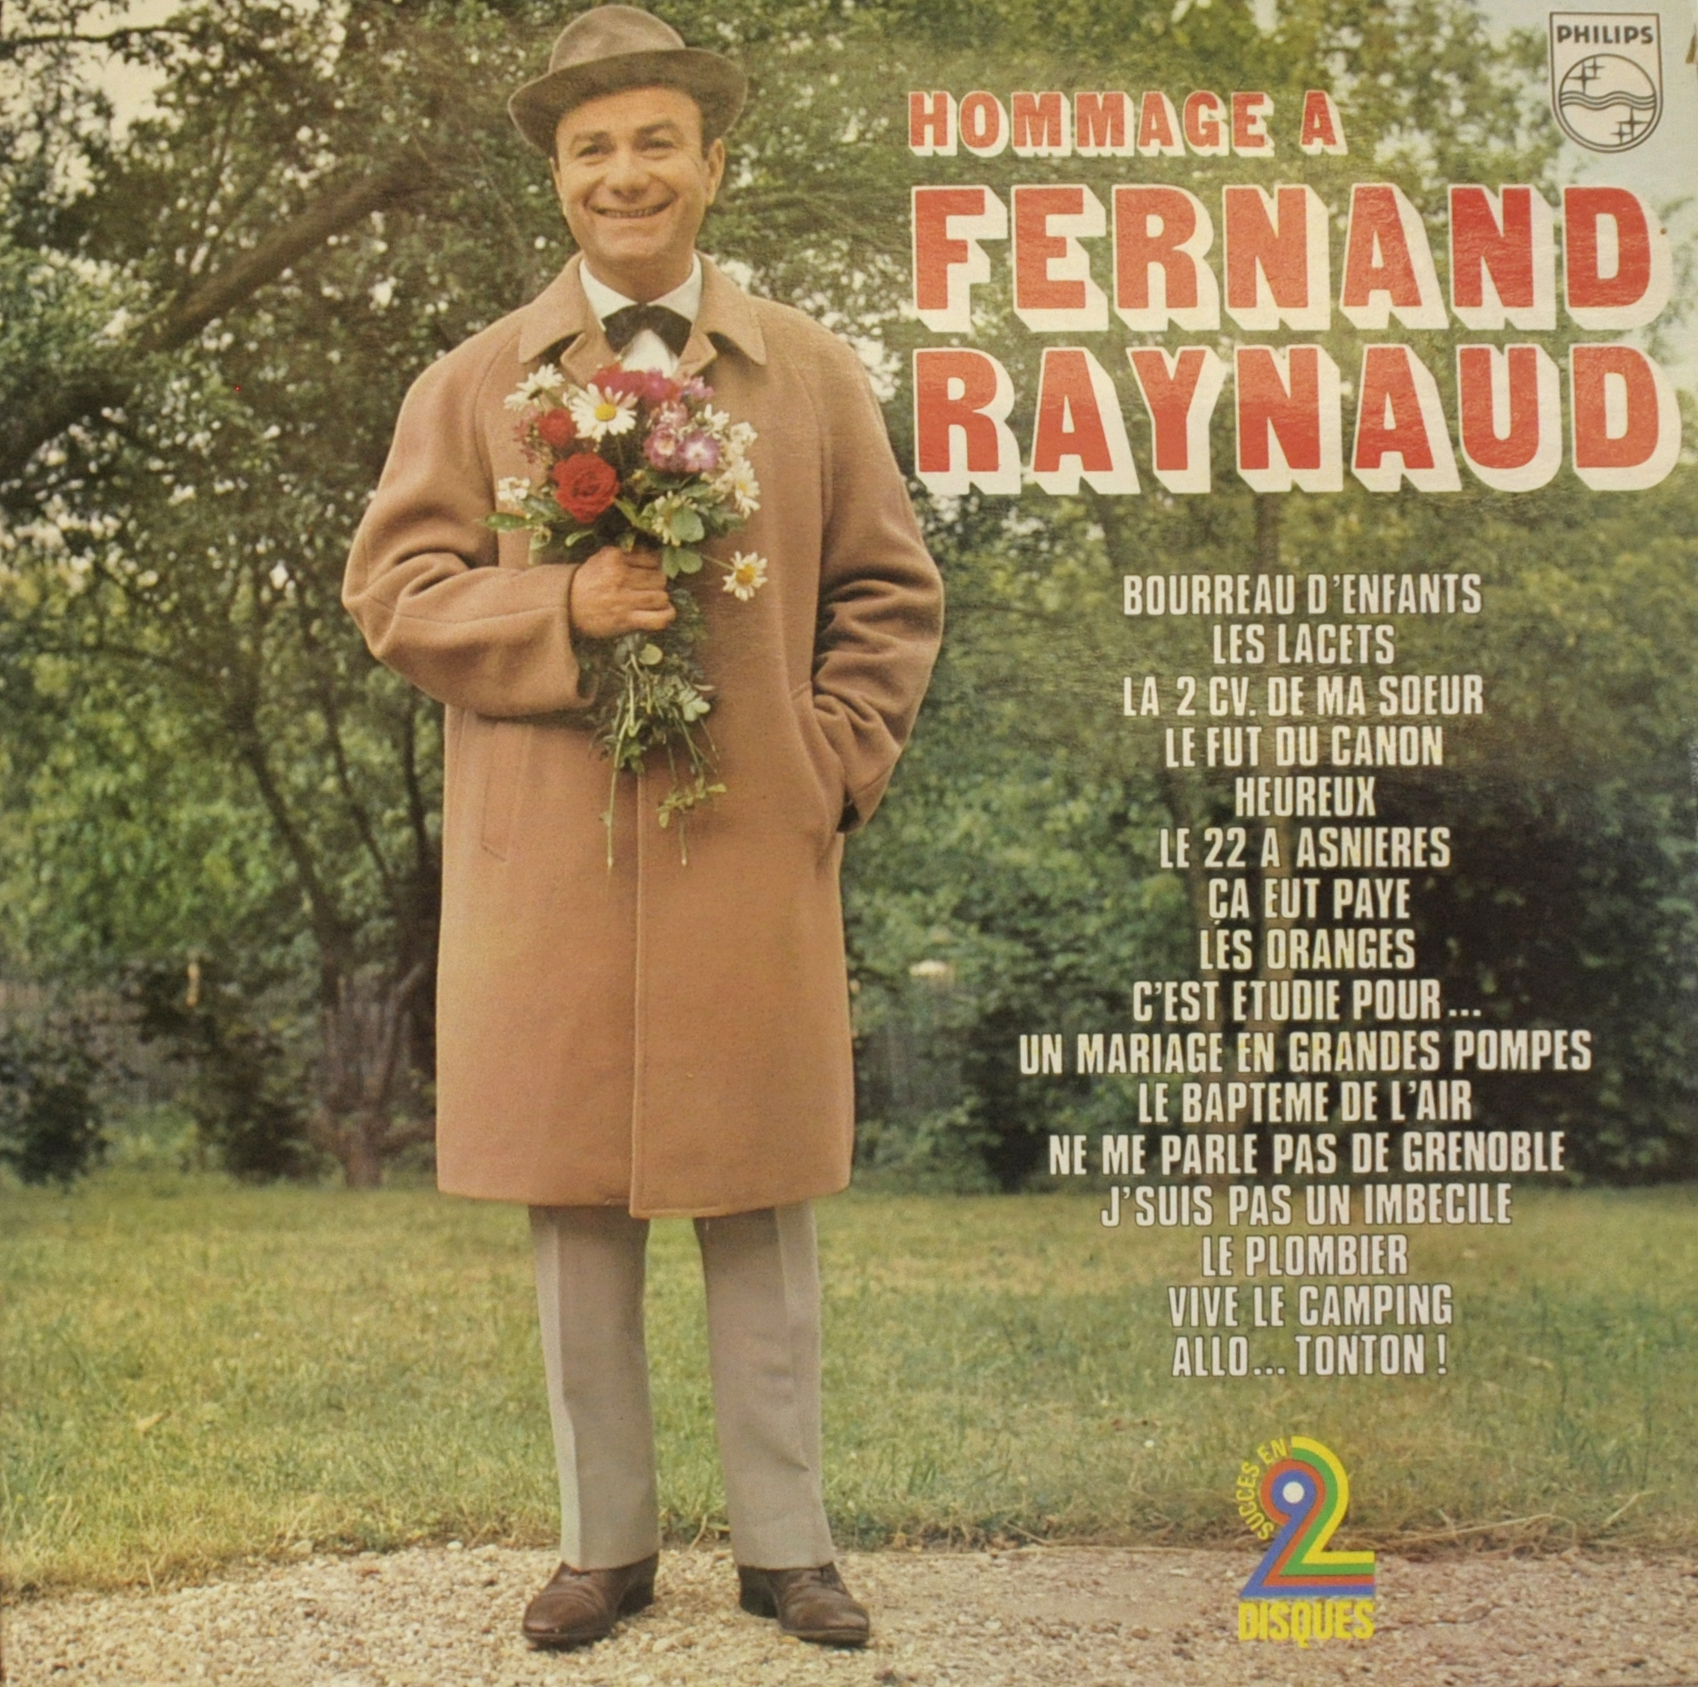 Acheter disque vinyle RAYNAUD Fernand Hommage à Fernand Raynaud a vendre